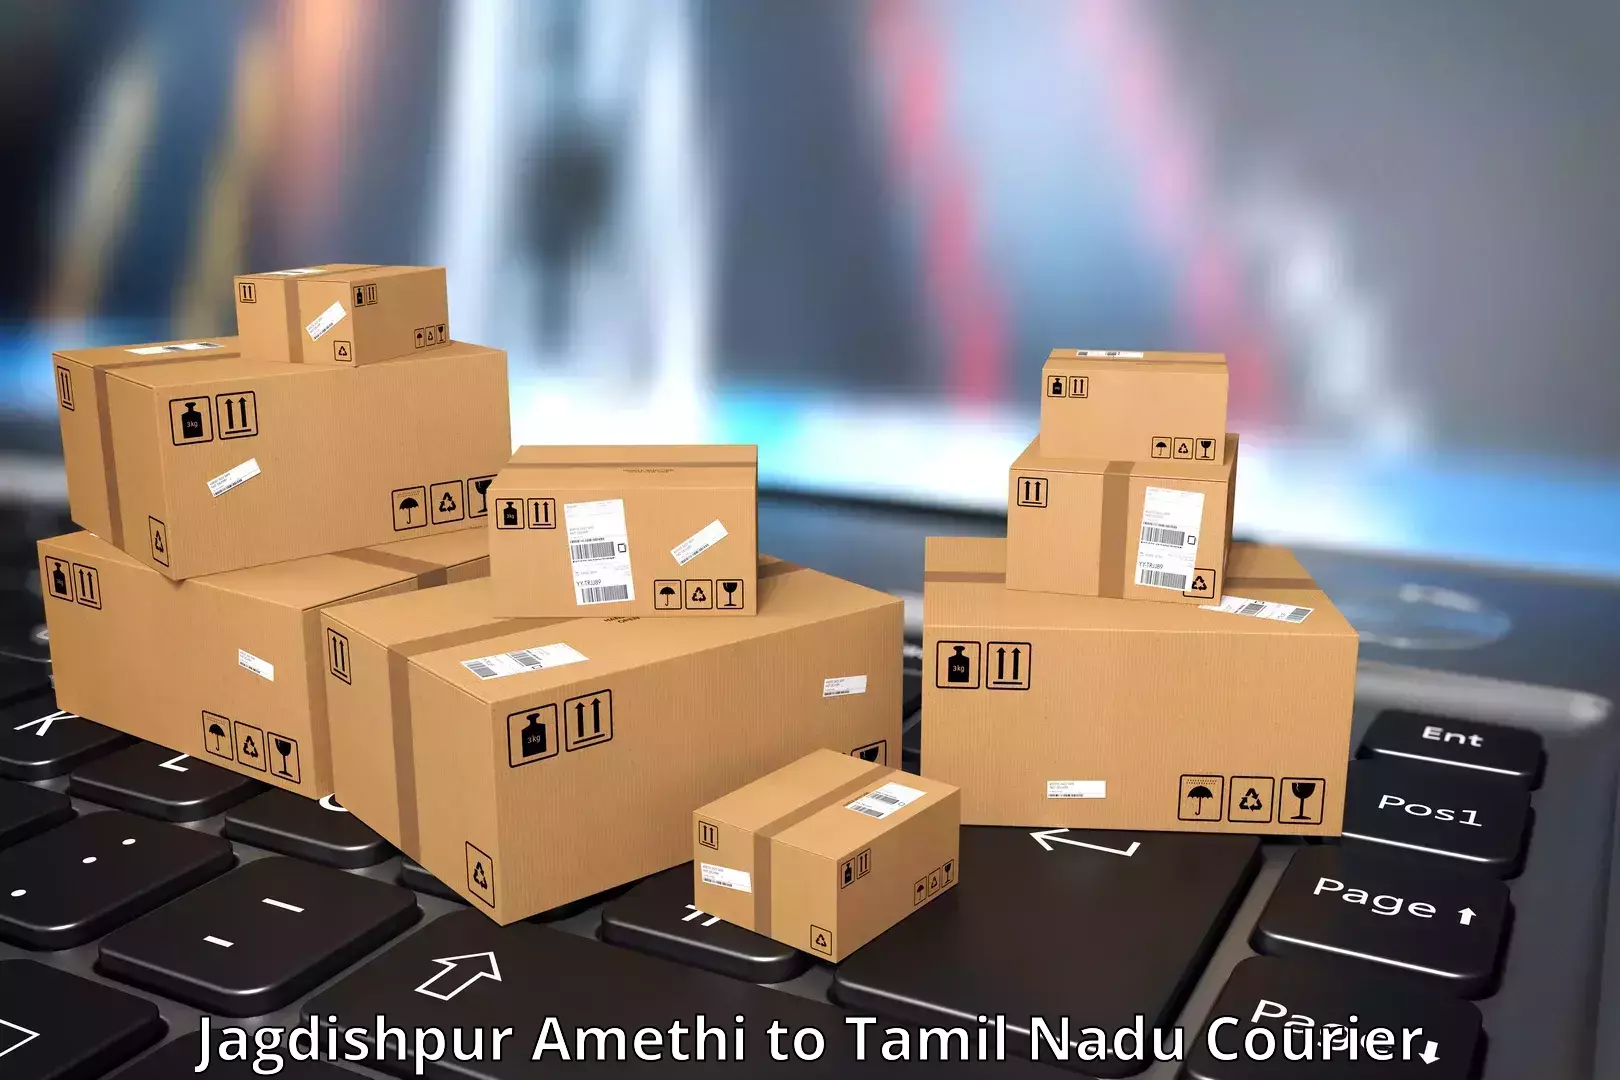 Digital courier platforms Jagdishpur Amethi to Thisayanvilai